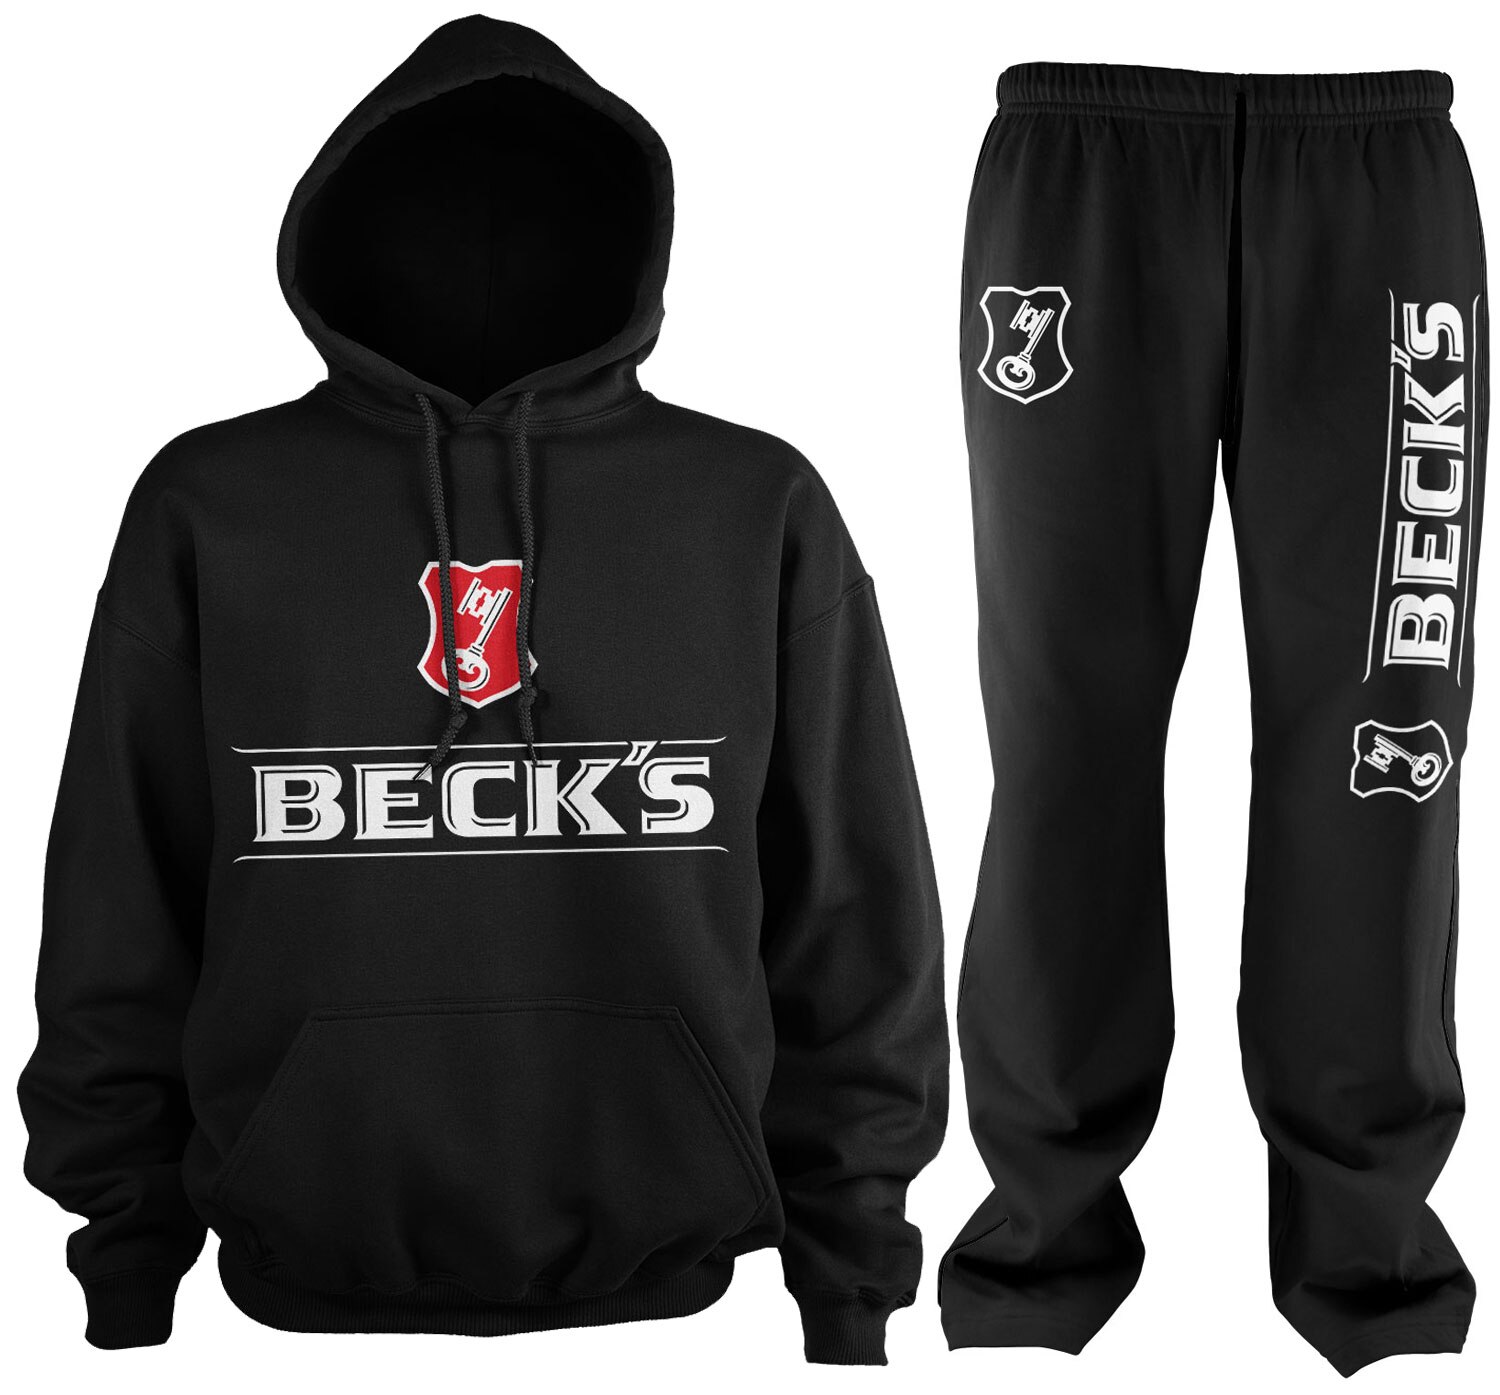 Beck's Logo Soft Set